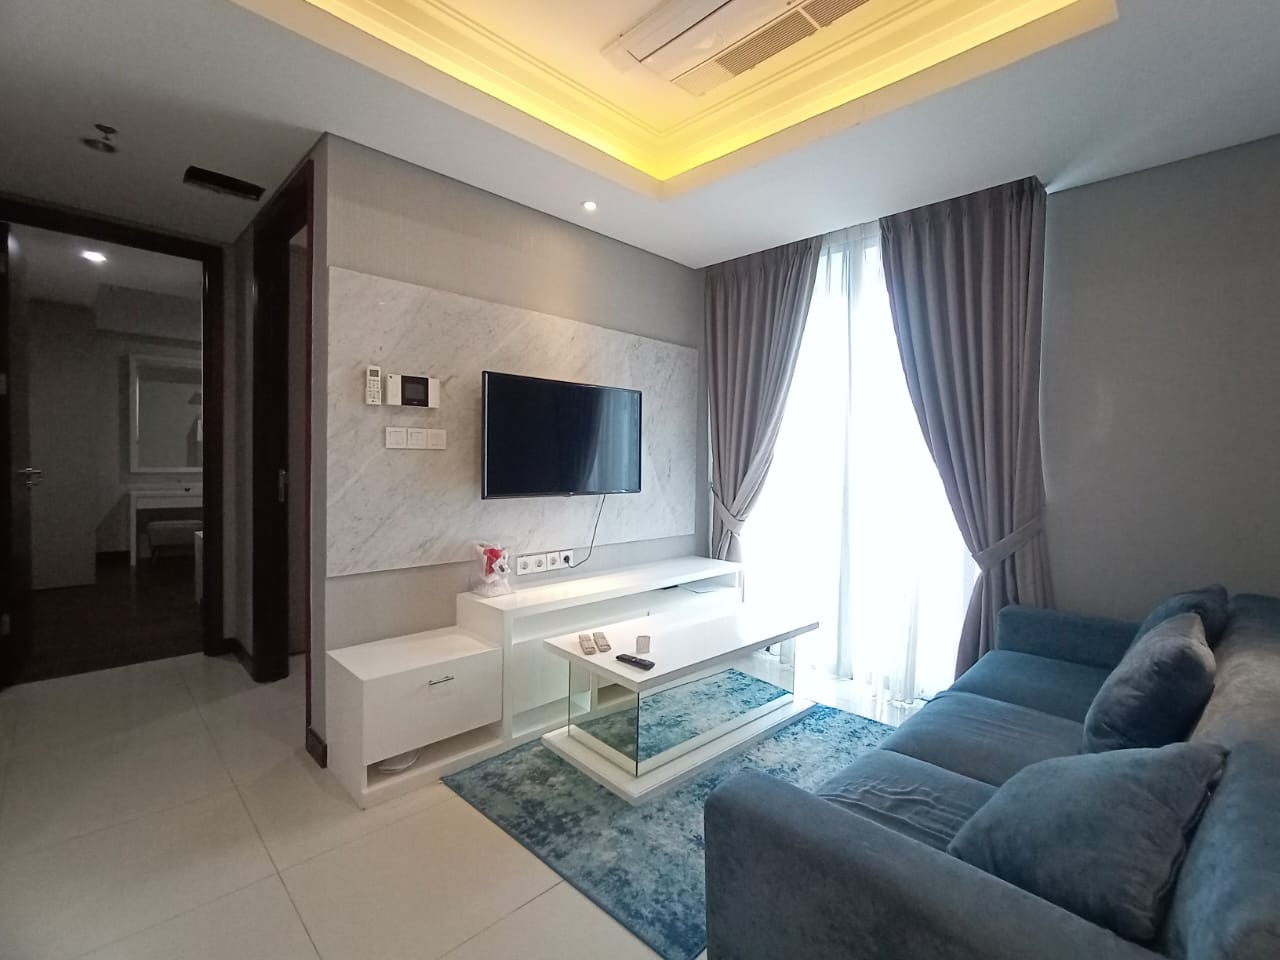 For Rent 2 bedrooms Casa Grande Phase 2 South Jakarta